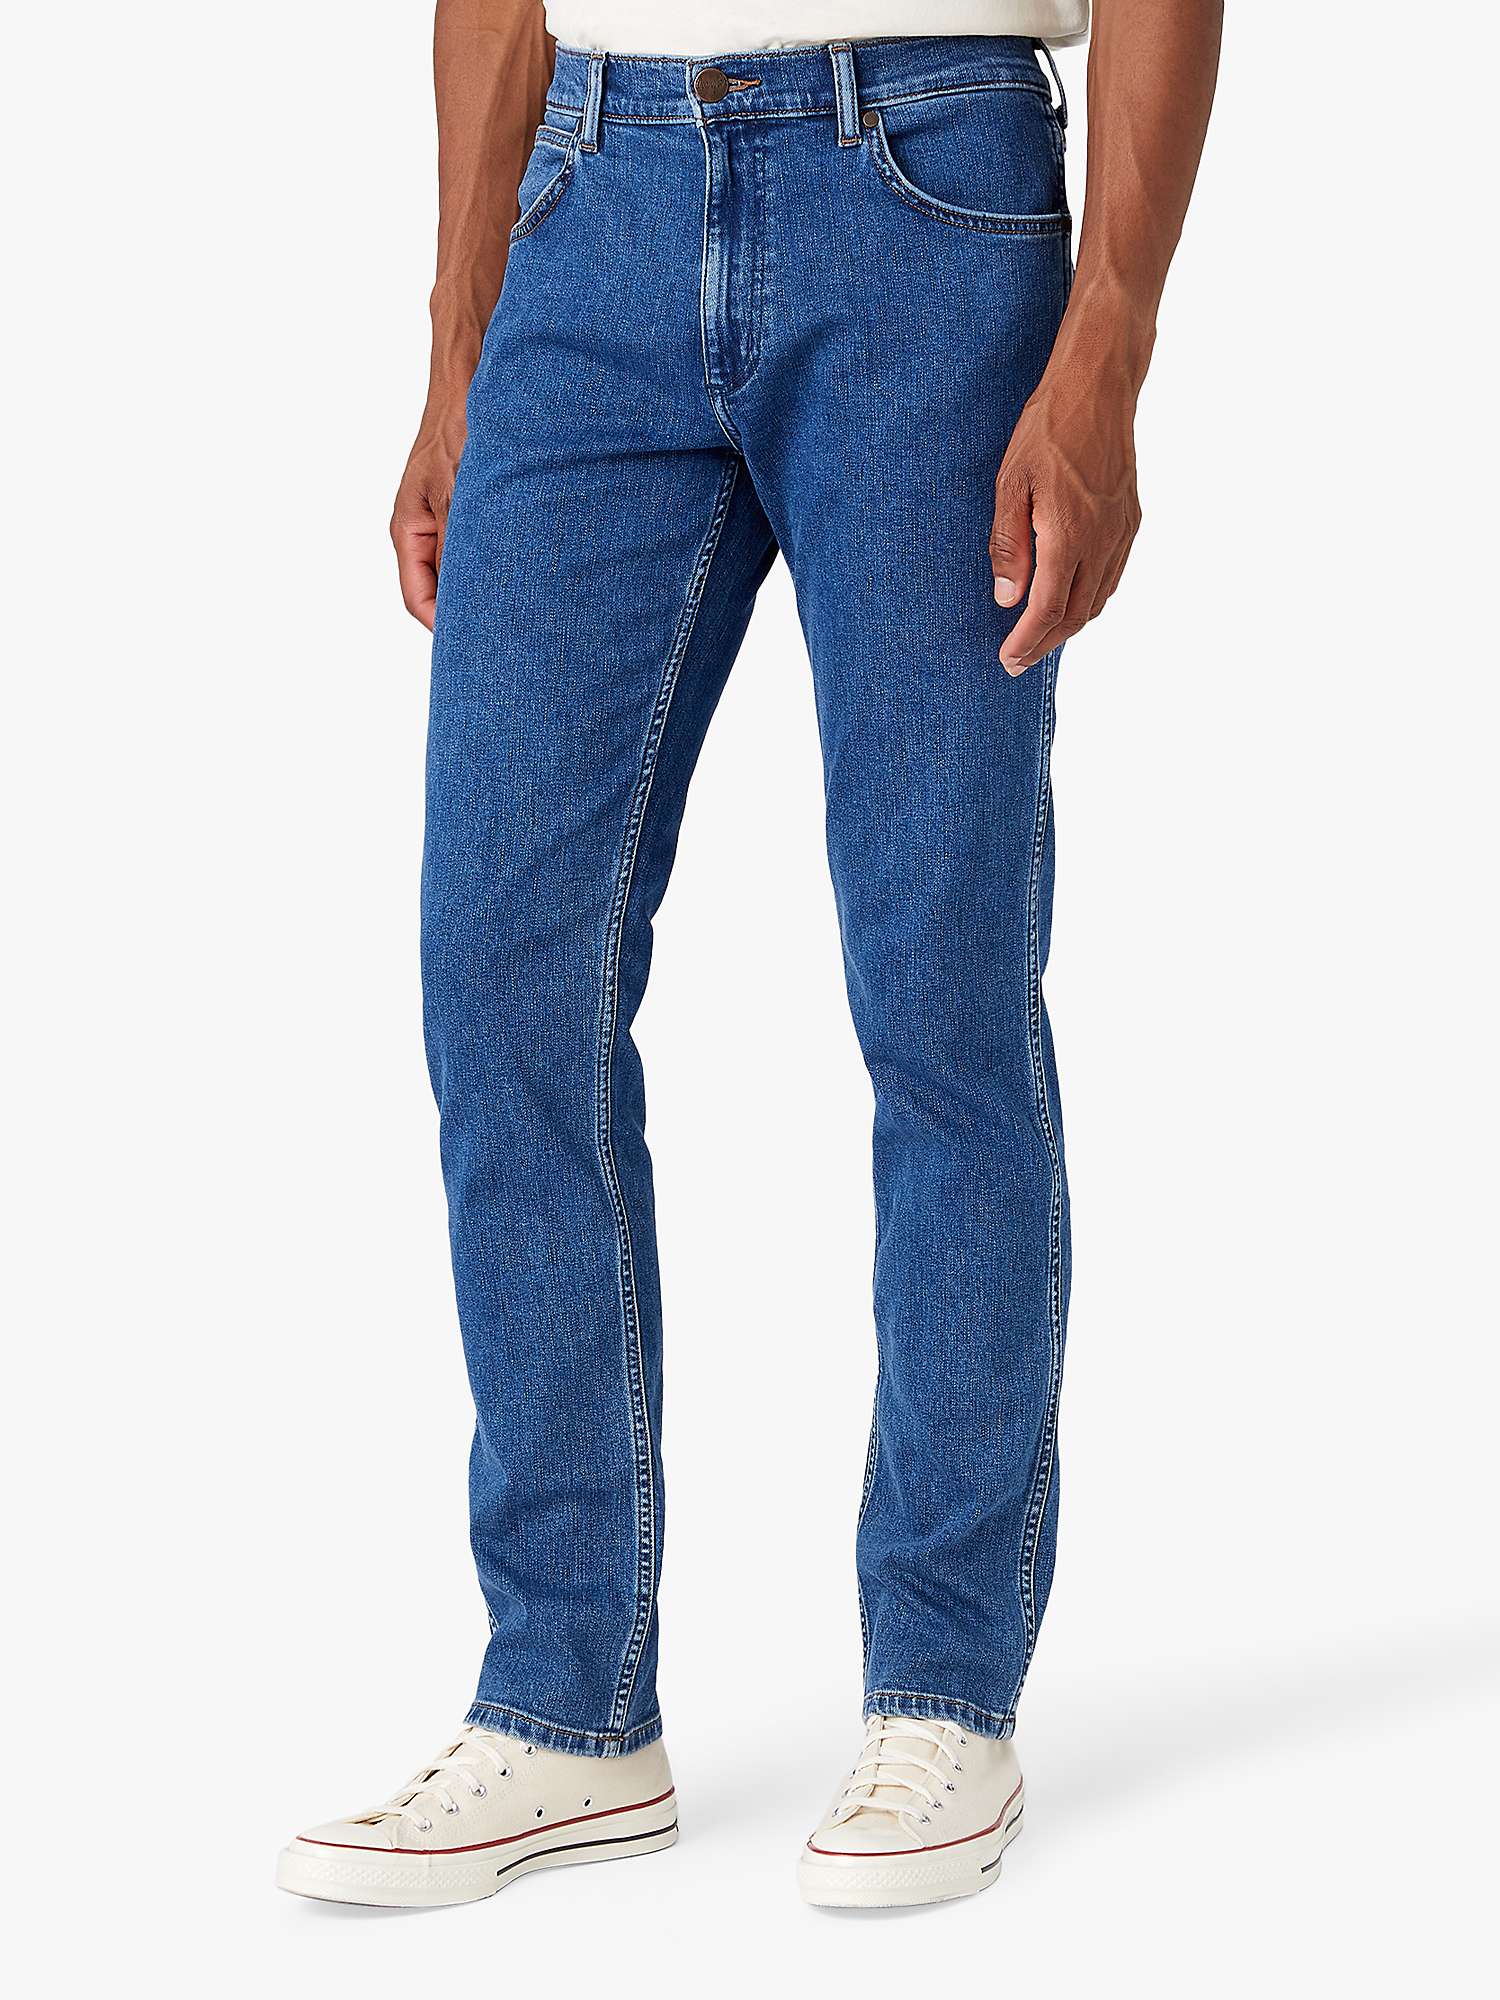 Wrangler Greensboro Slim Fit Jeans, The Stone Ride at John Lewis & Partners